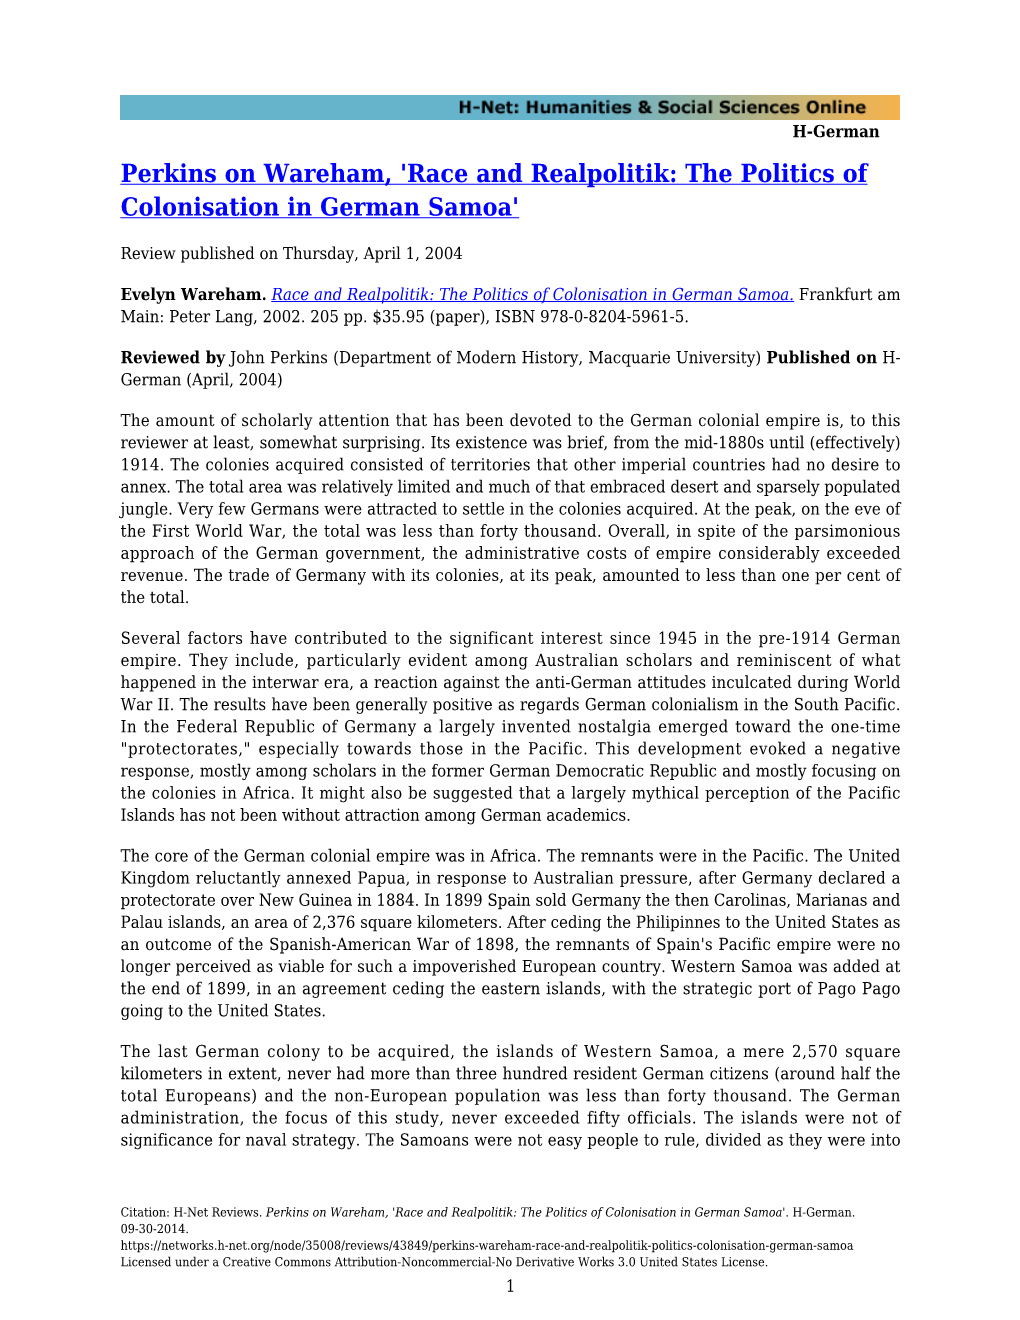 Perkins on Wareham, 'Race and Realpolitik: the Politics of Colonisation in German Samoa'